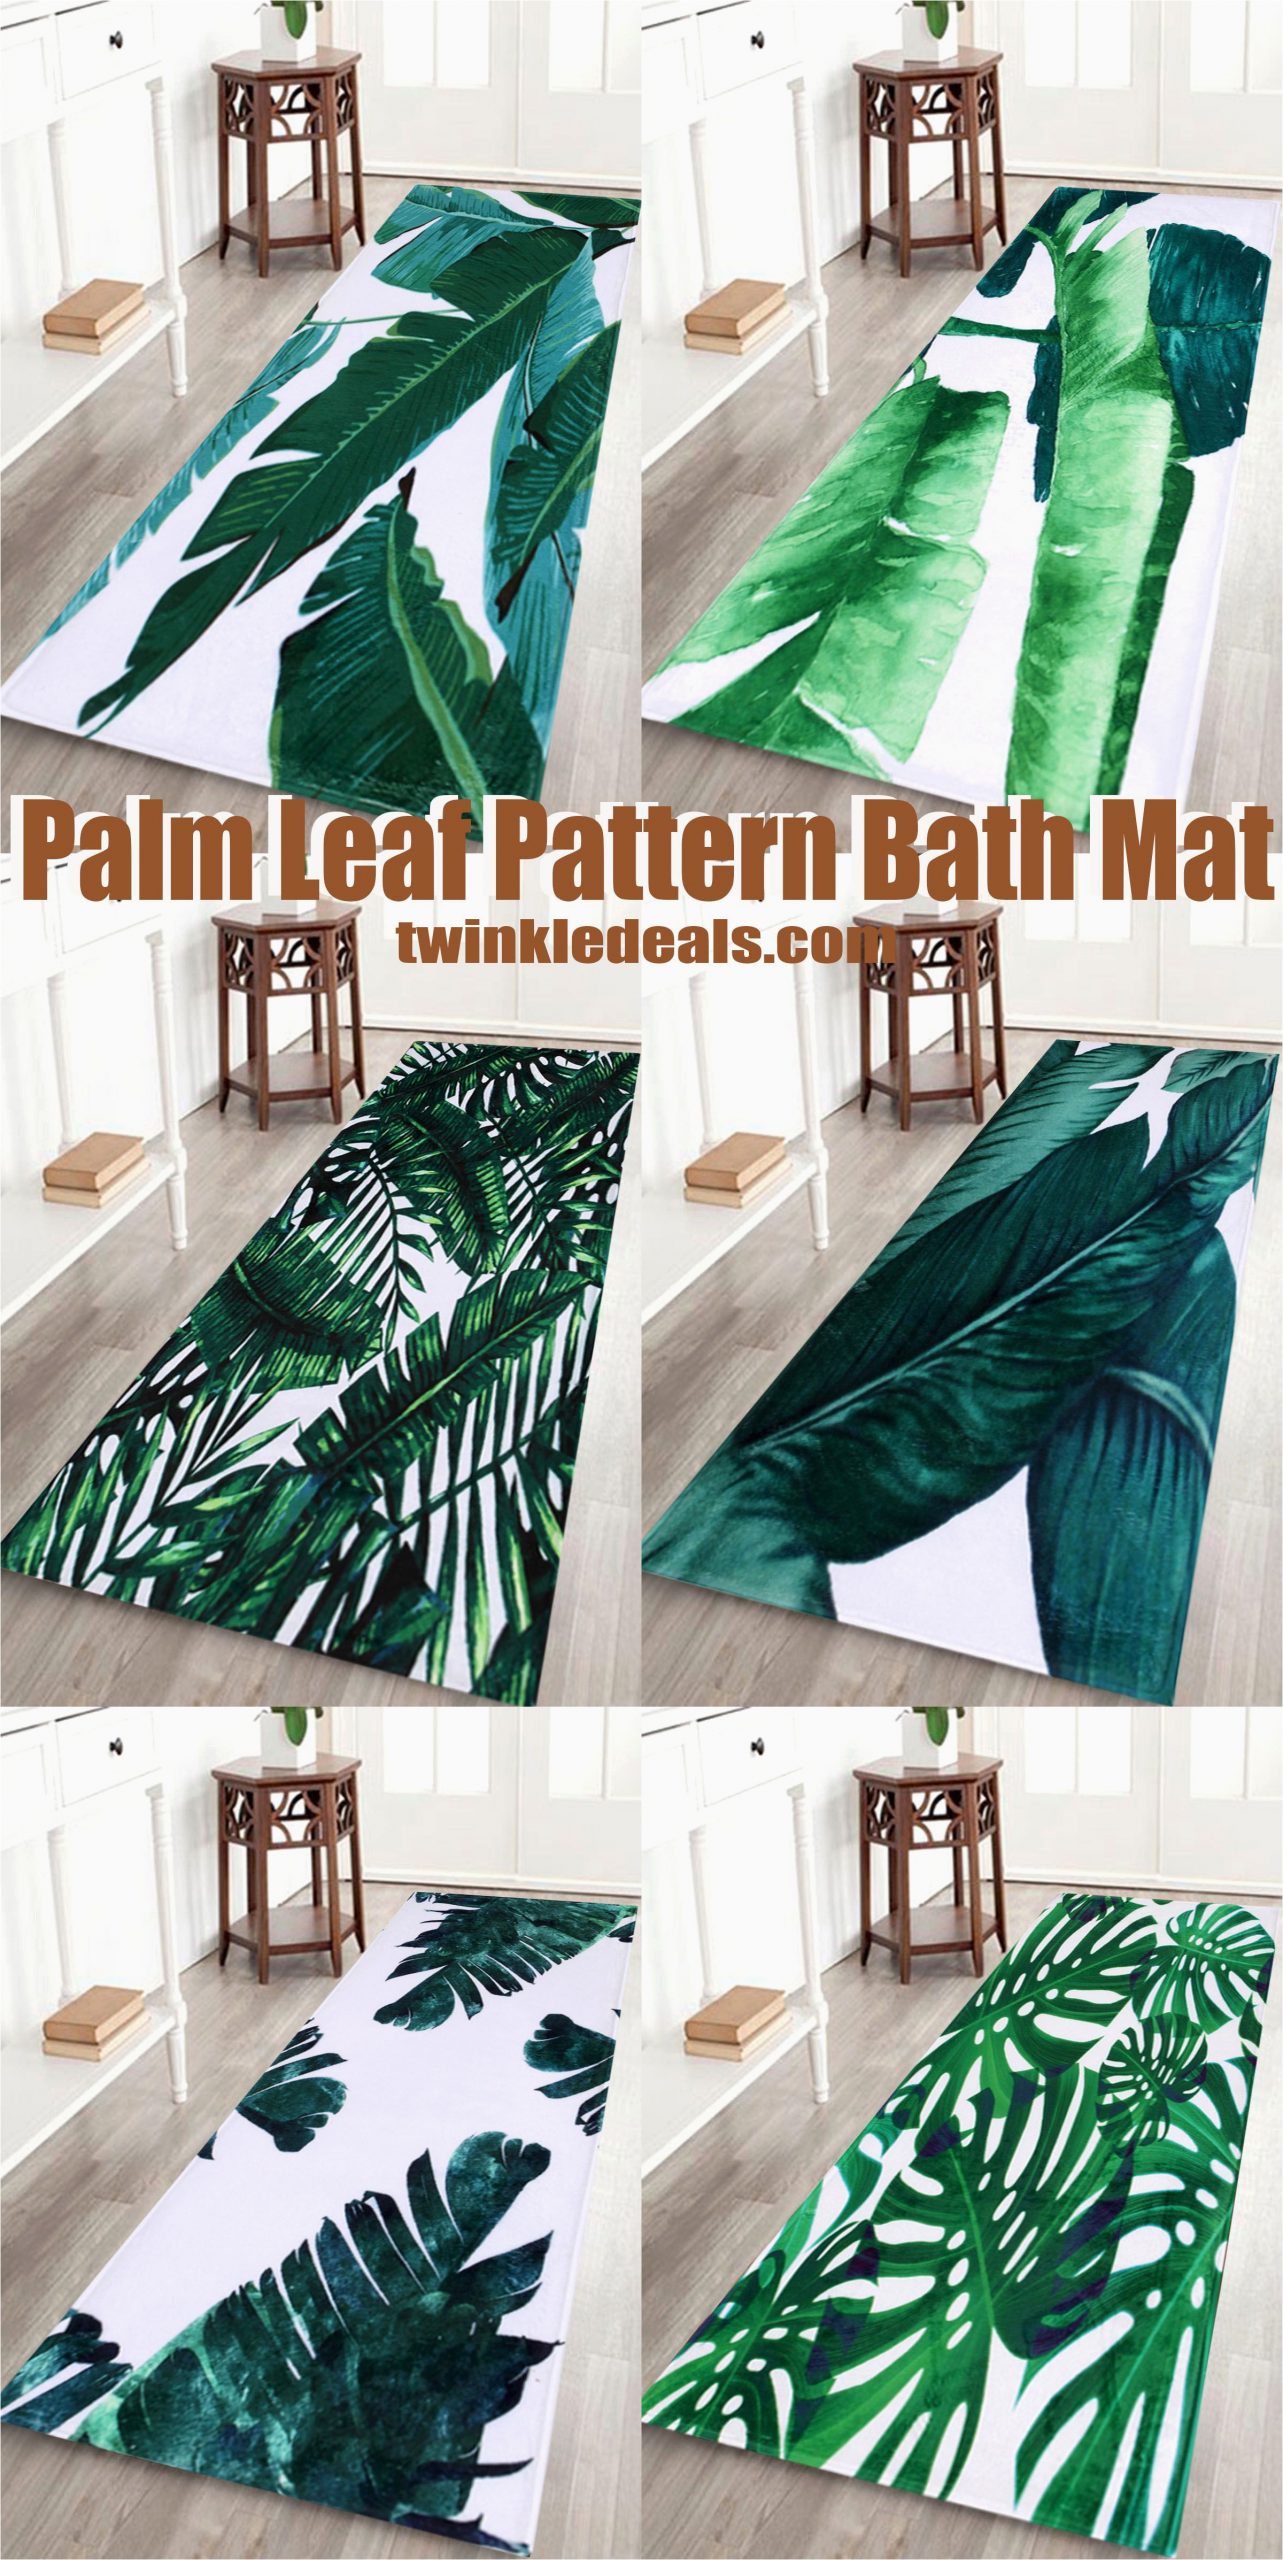 Palm Leaf Bath Rug Palm Leaf Pattern Bath Mat European Home Decor Tropical